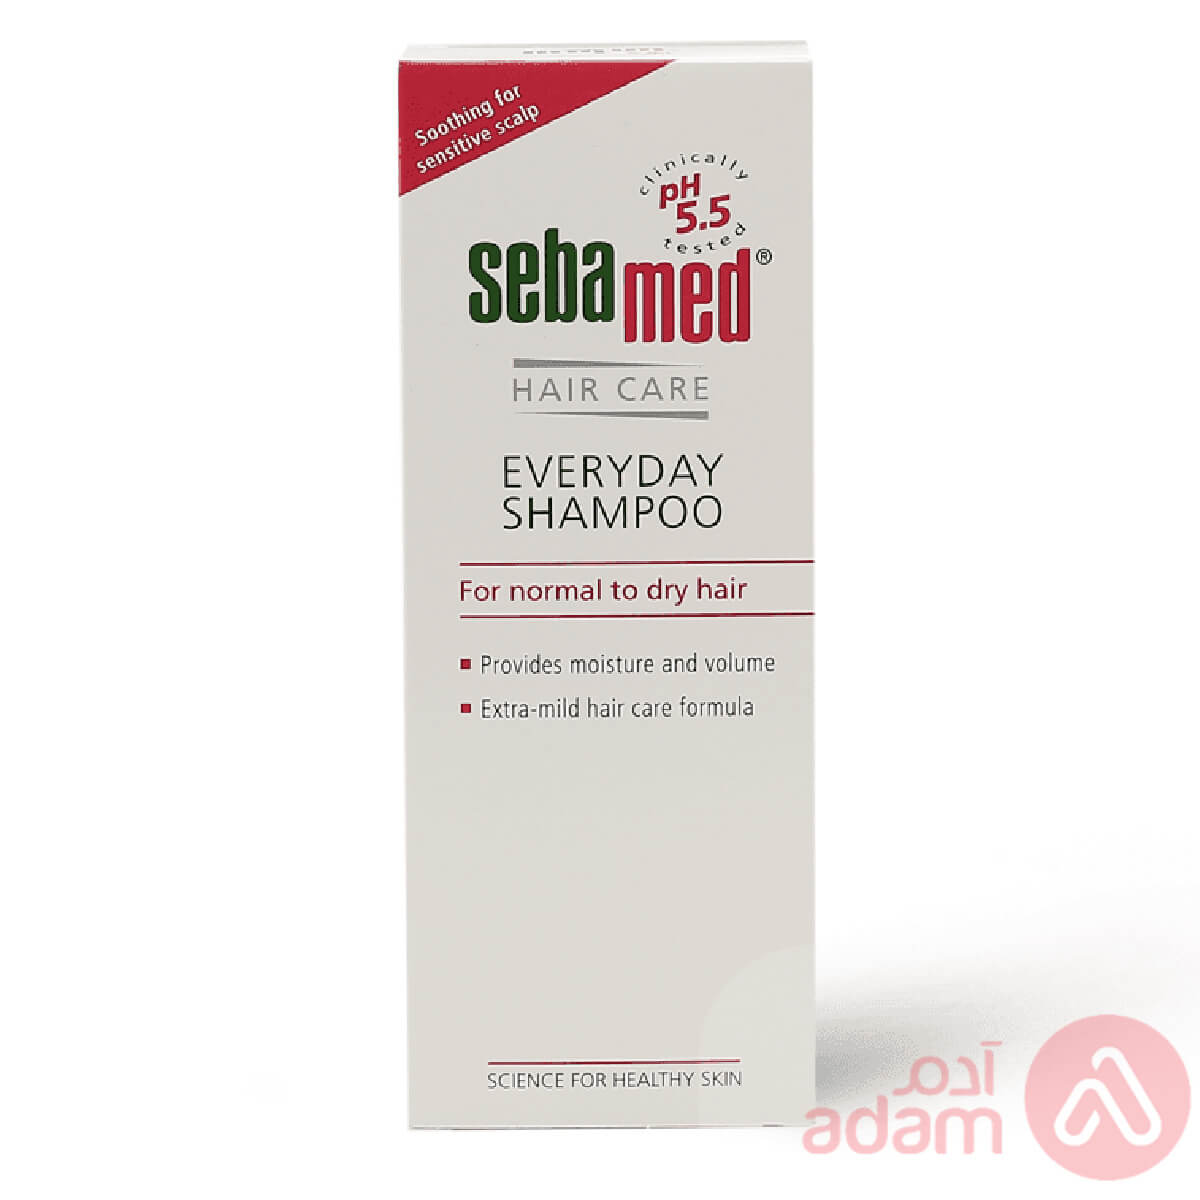 Sebamed Everyday Shampoo | 200Ml